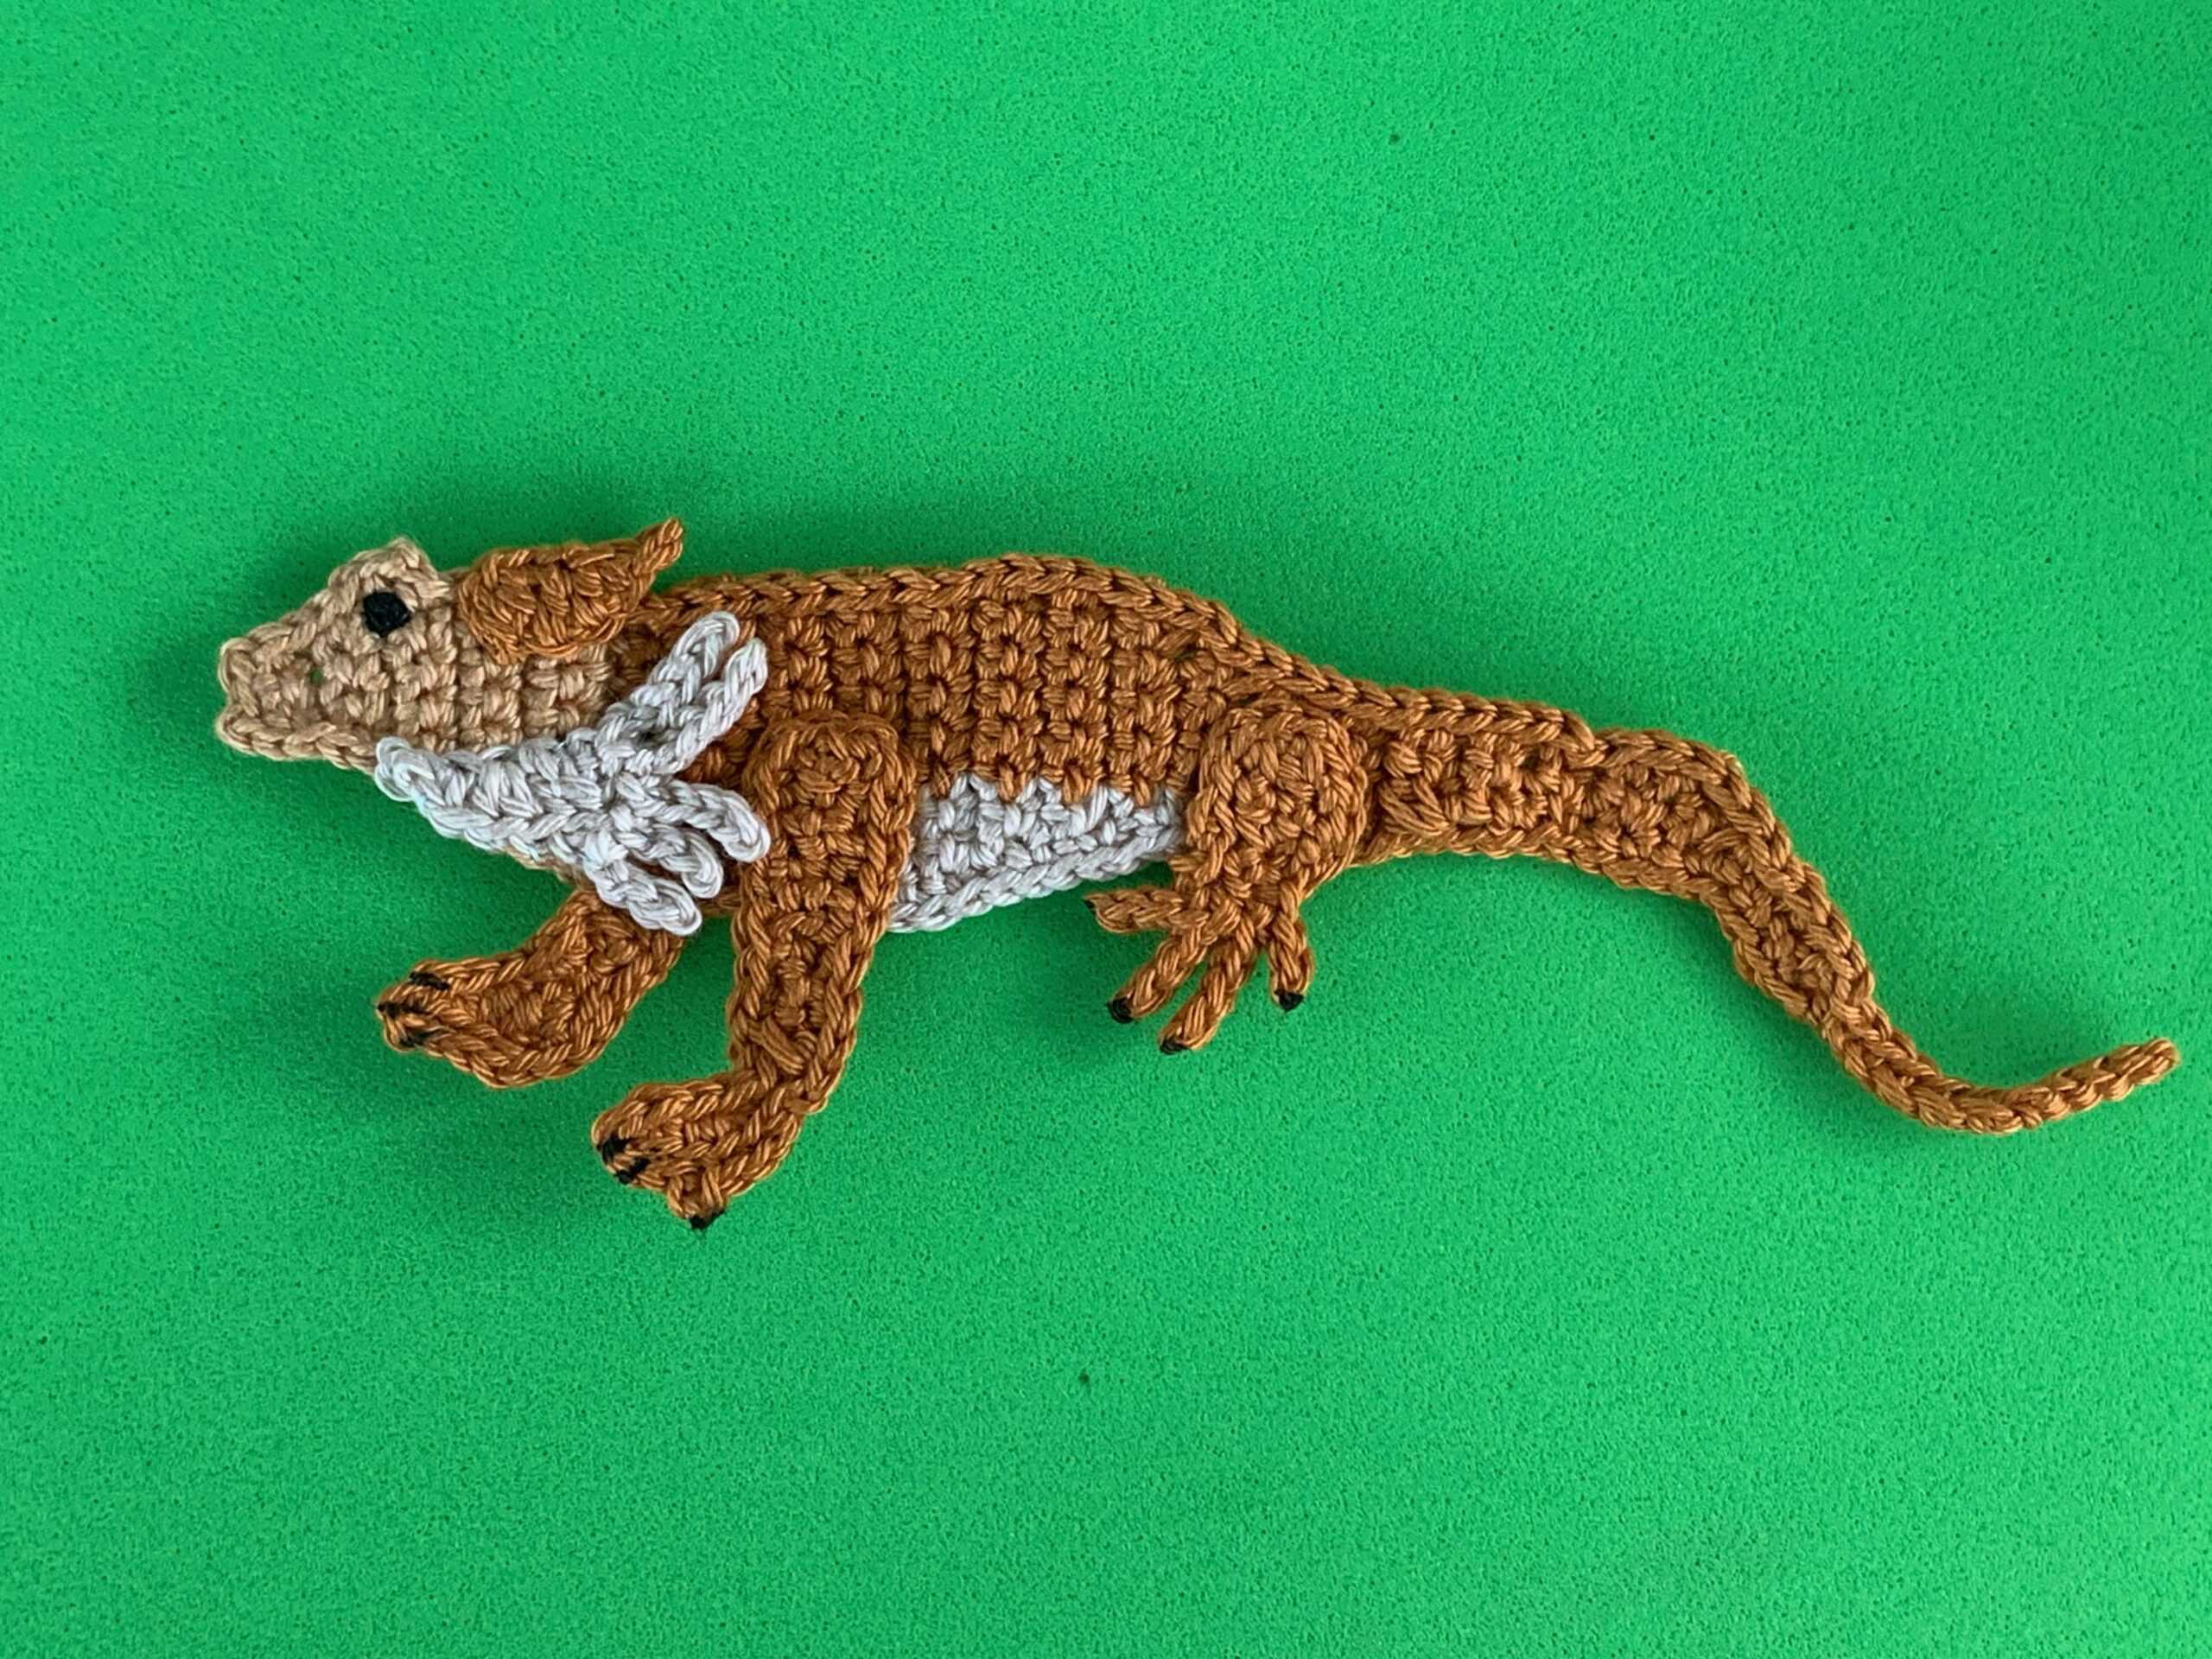 Finished crochet lizard 4 ply landscape